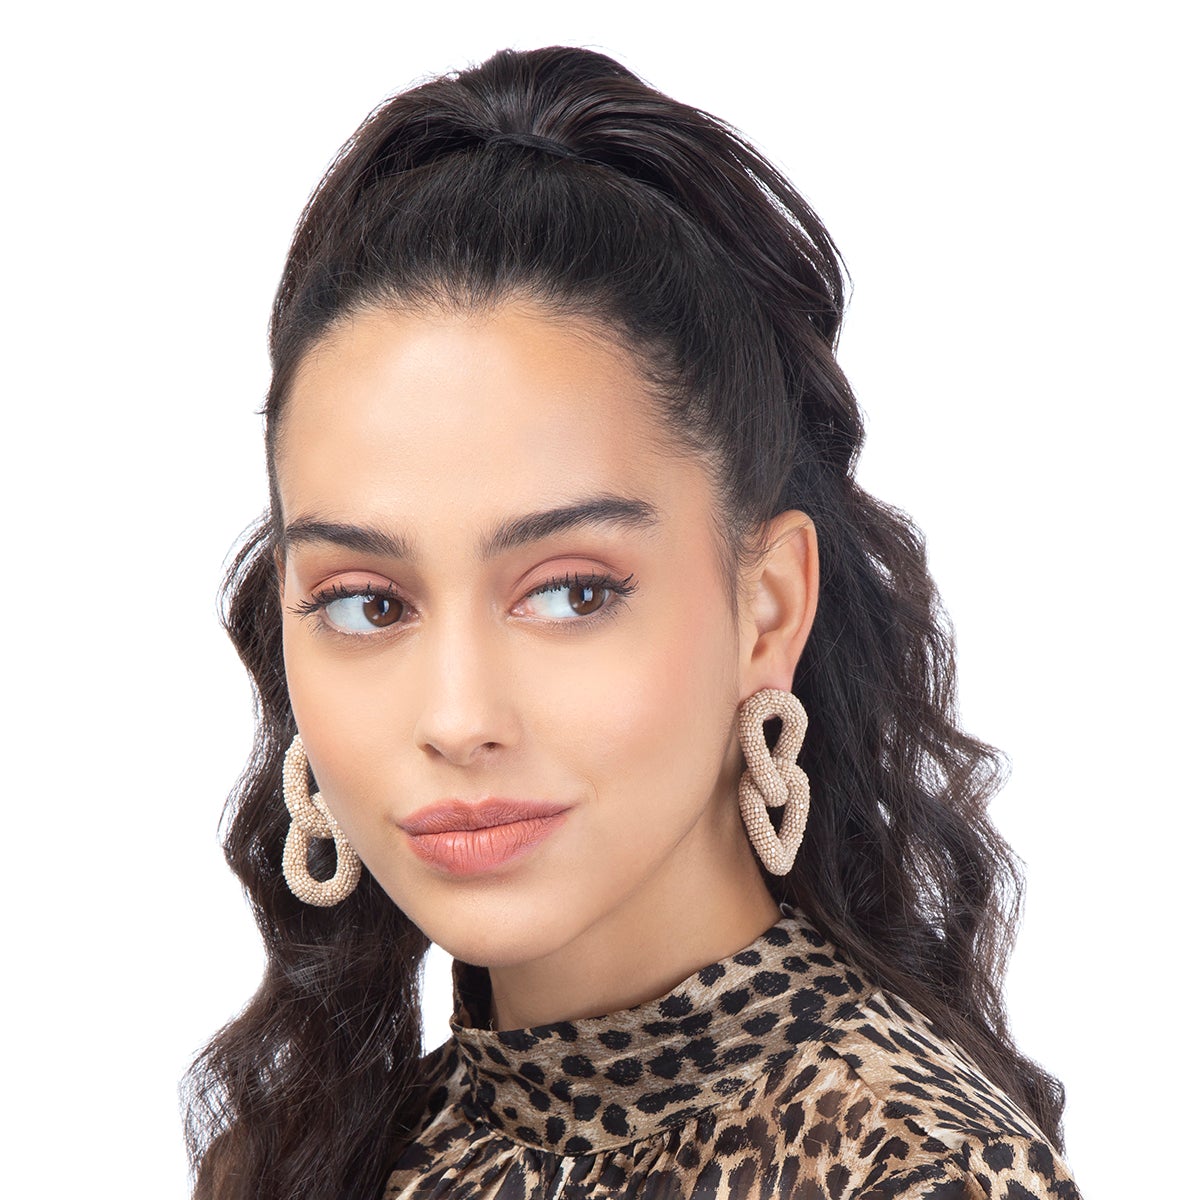 Model wearing two link beaded post earrings in champagne color